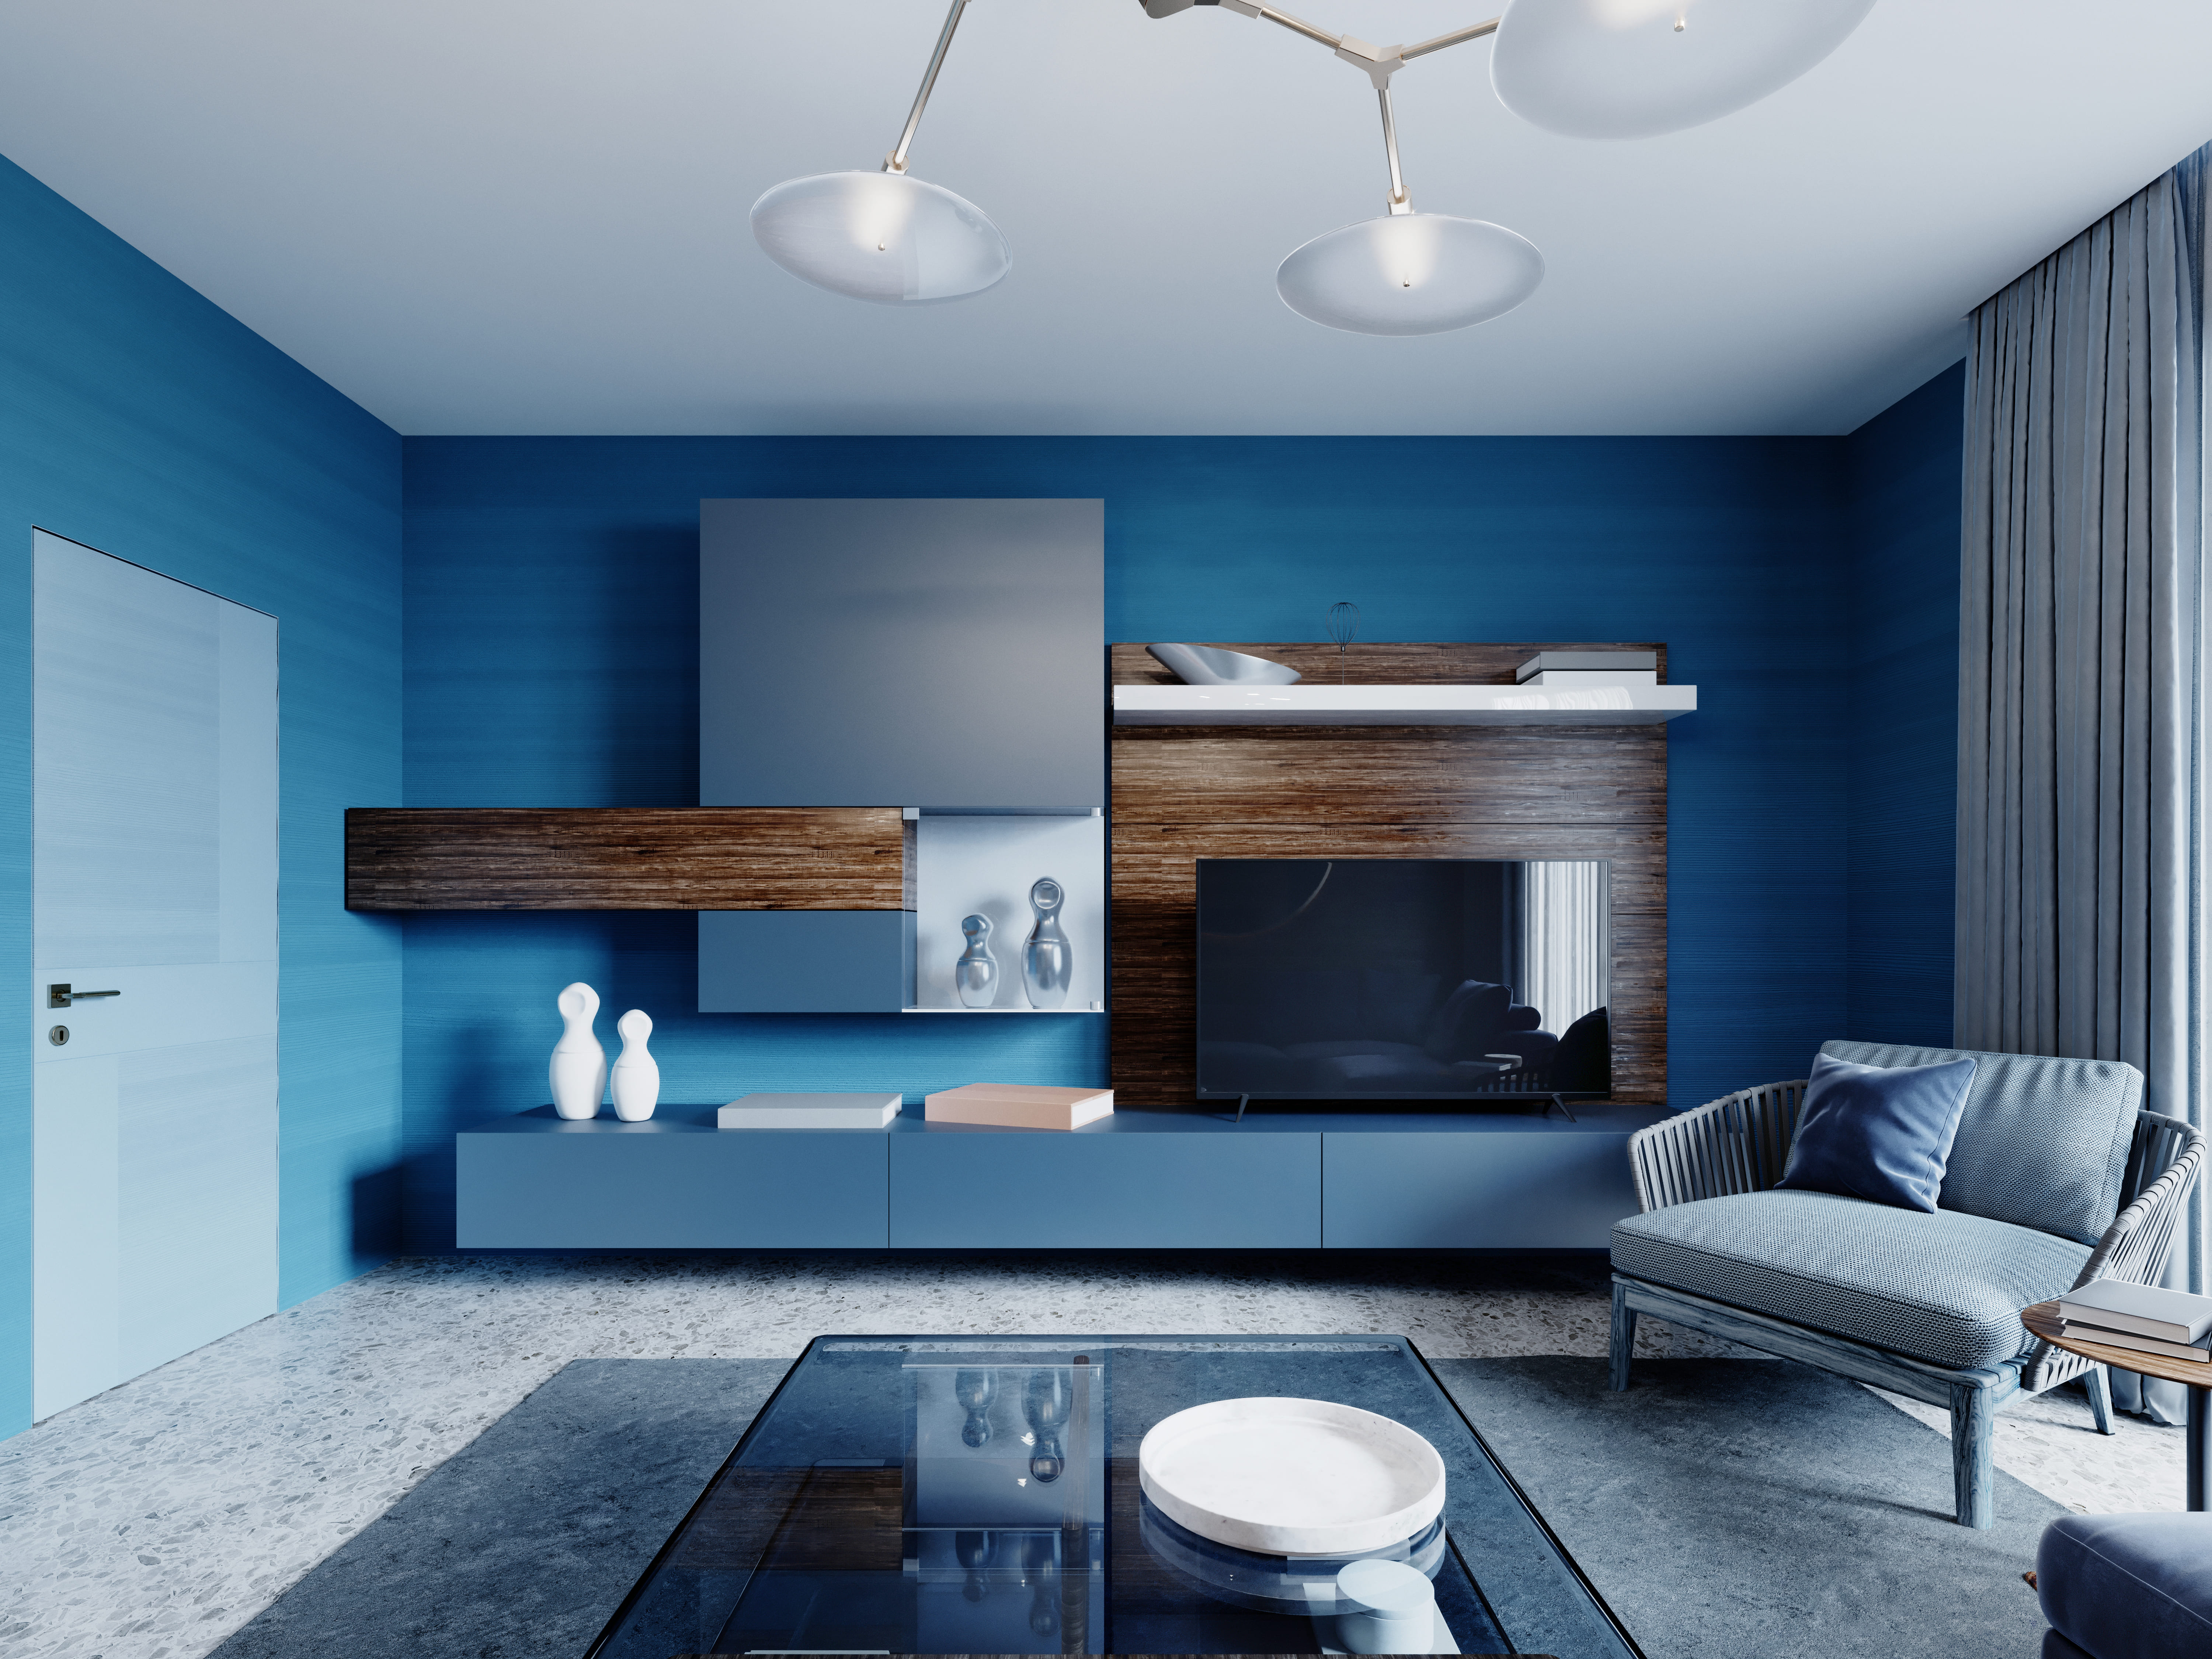 Top 13 Luxury Home Decor Ideas for a High-End Interior – Inspirations |  Essential Home